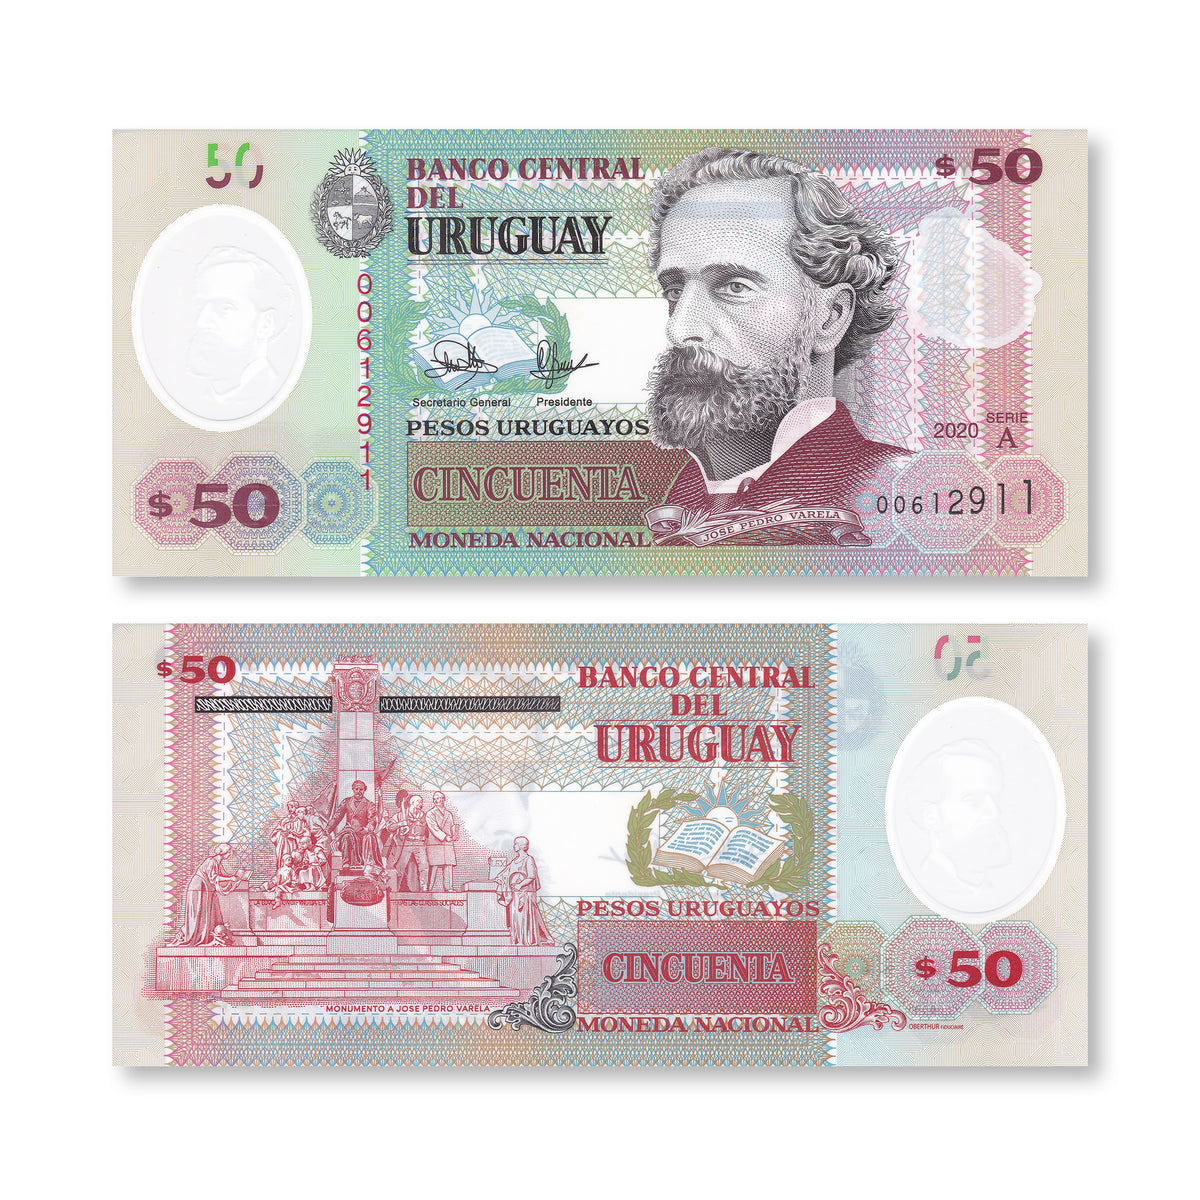 Uruguay 50 Pesos, 2020, B561a, UNC - Robert's World Money - World Banknotes